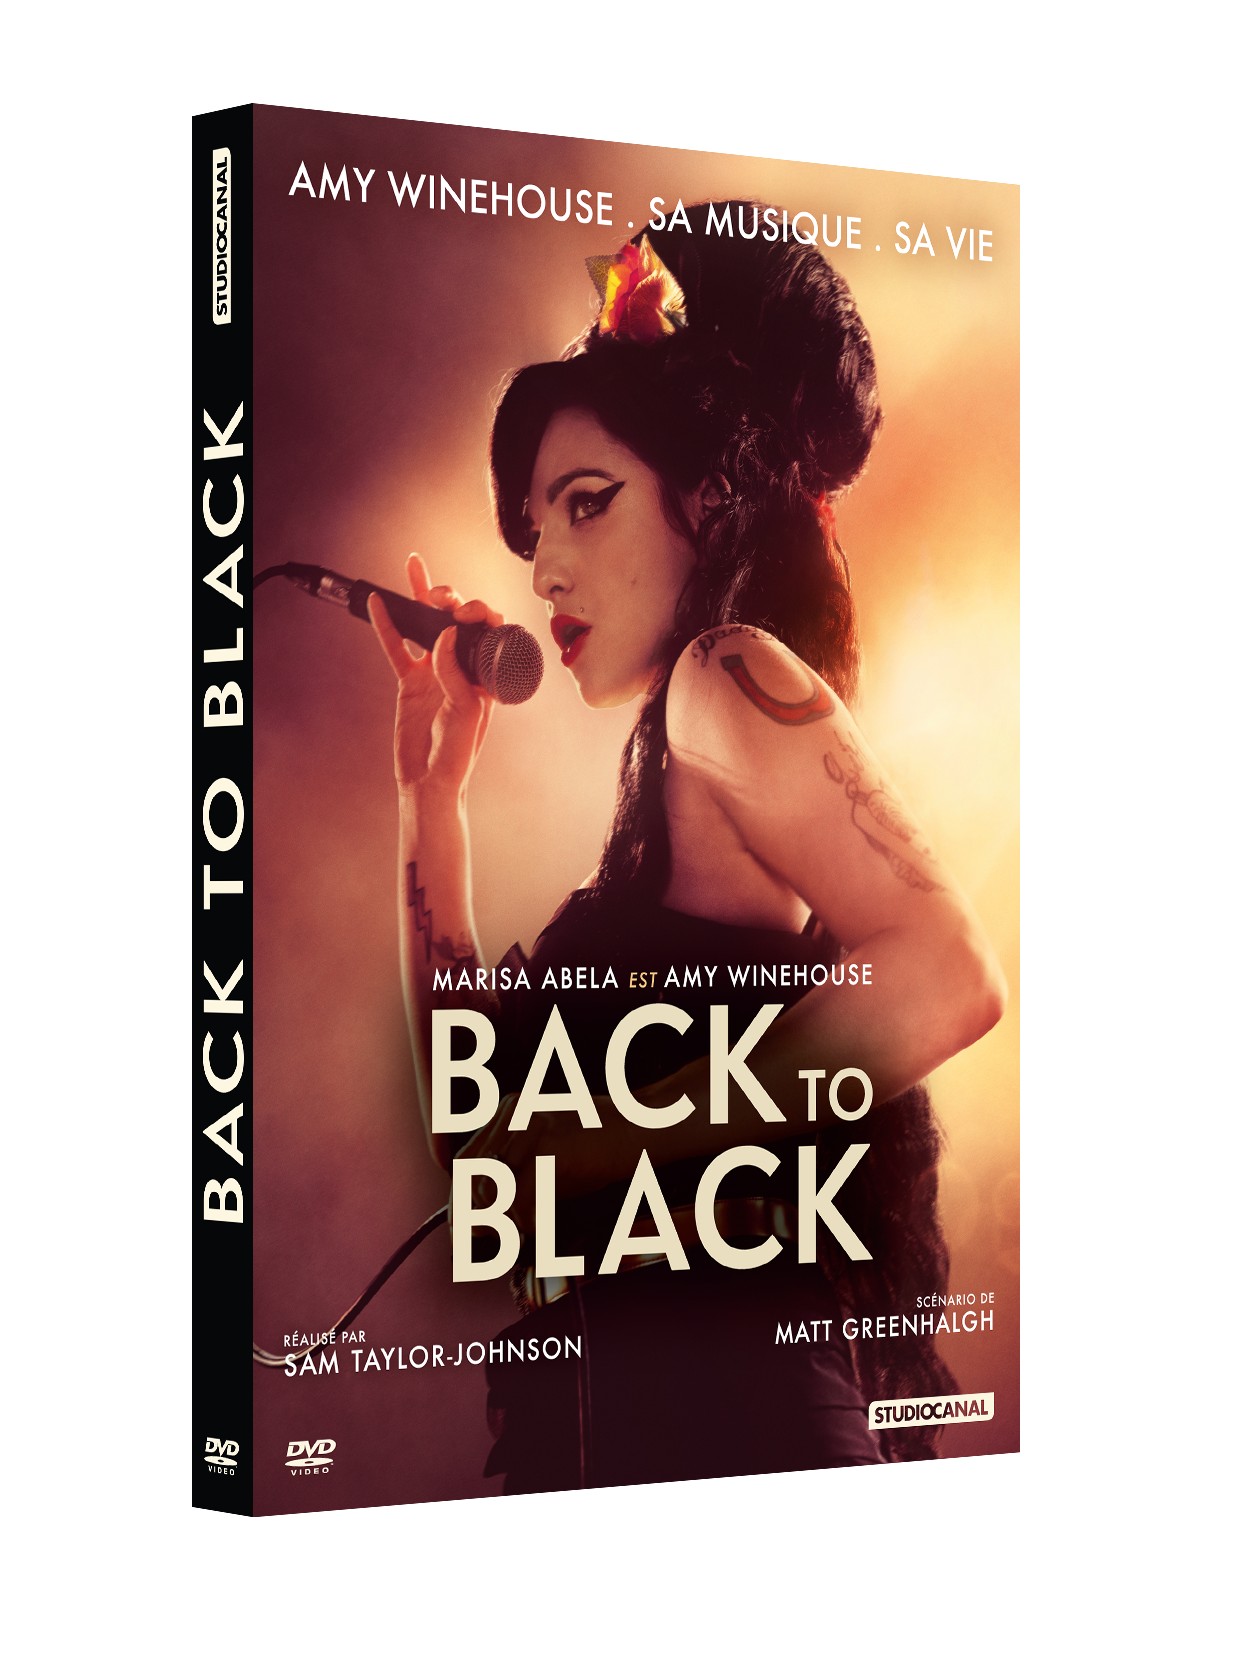 BACK TO BLACK - DVD